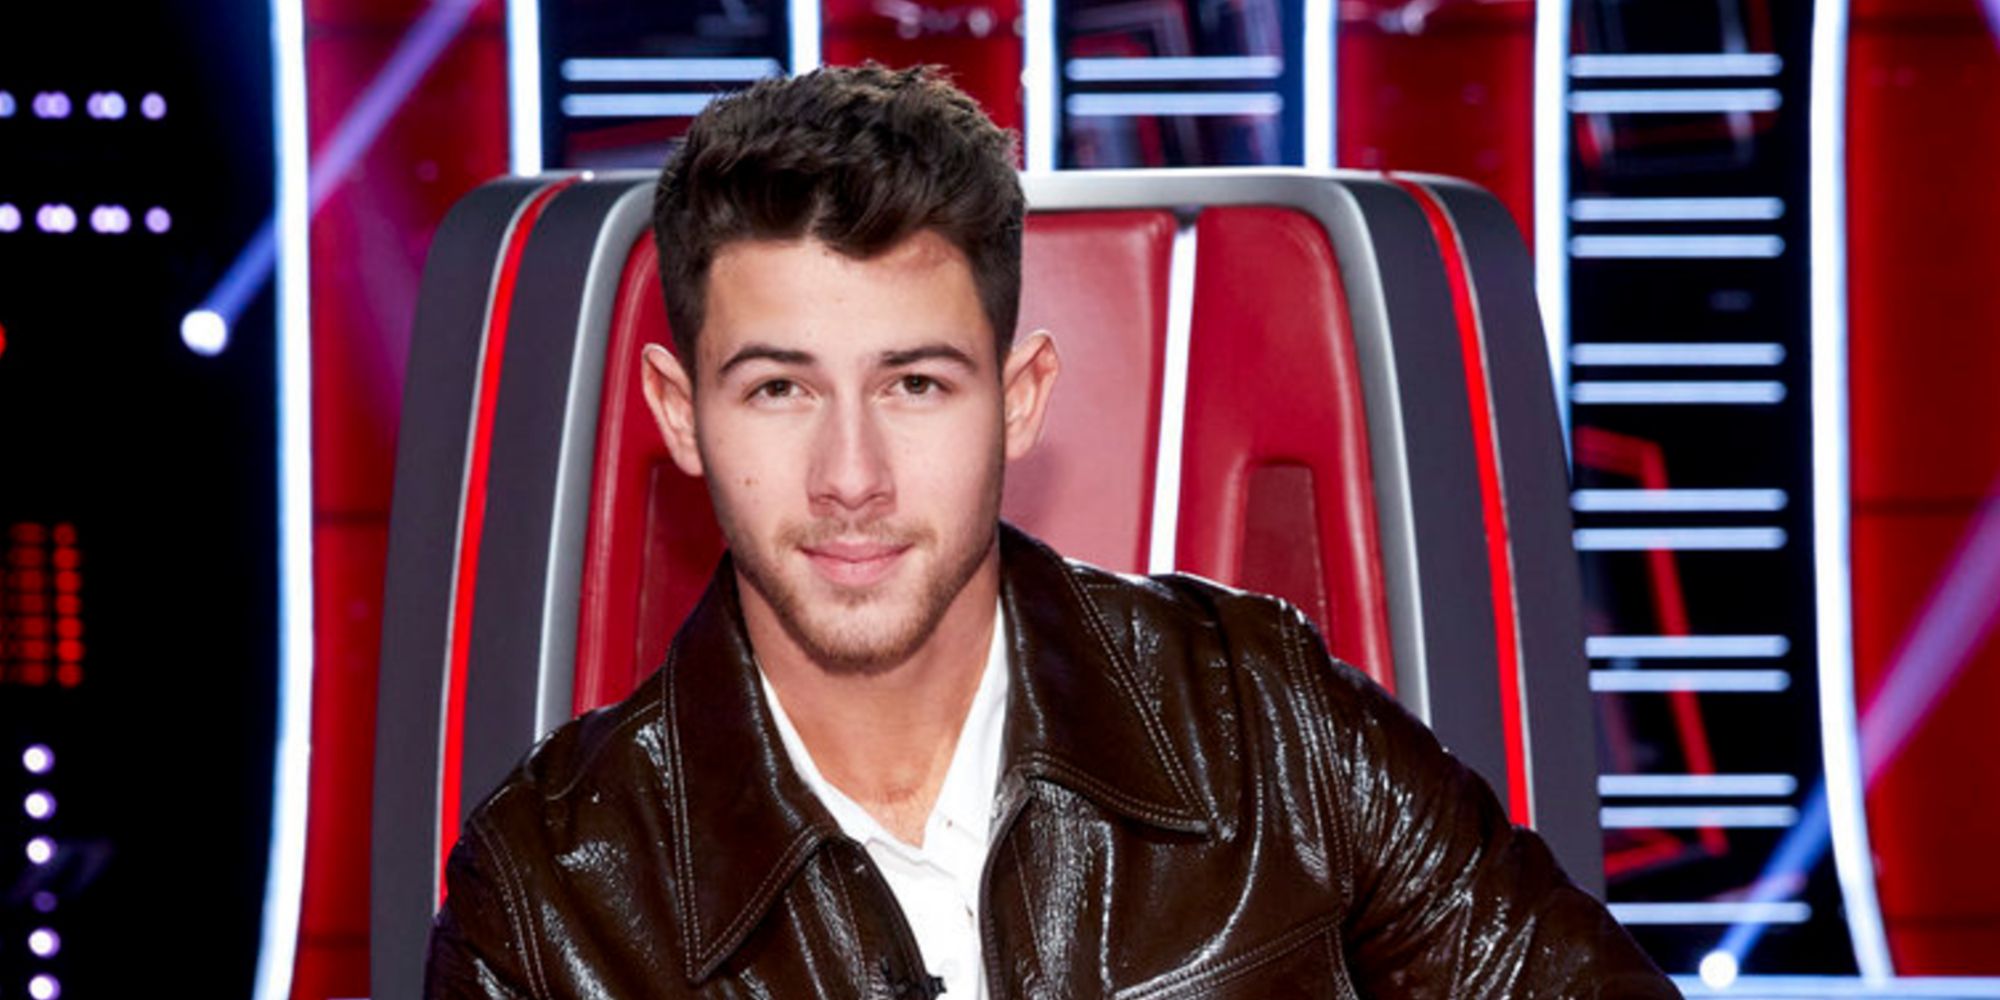 The Voice: Nick Jonas Reacts To Blake Shelton's Joke About His Injury